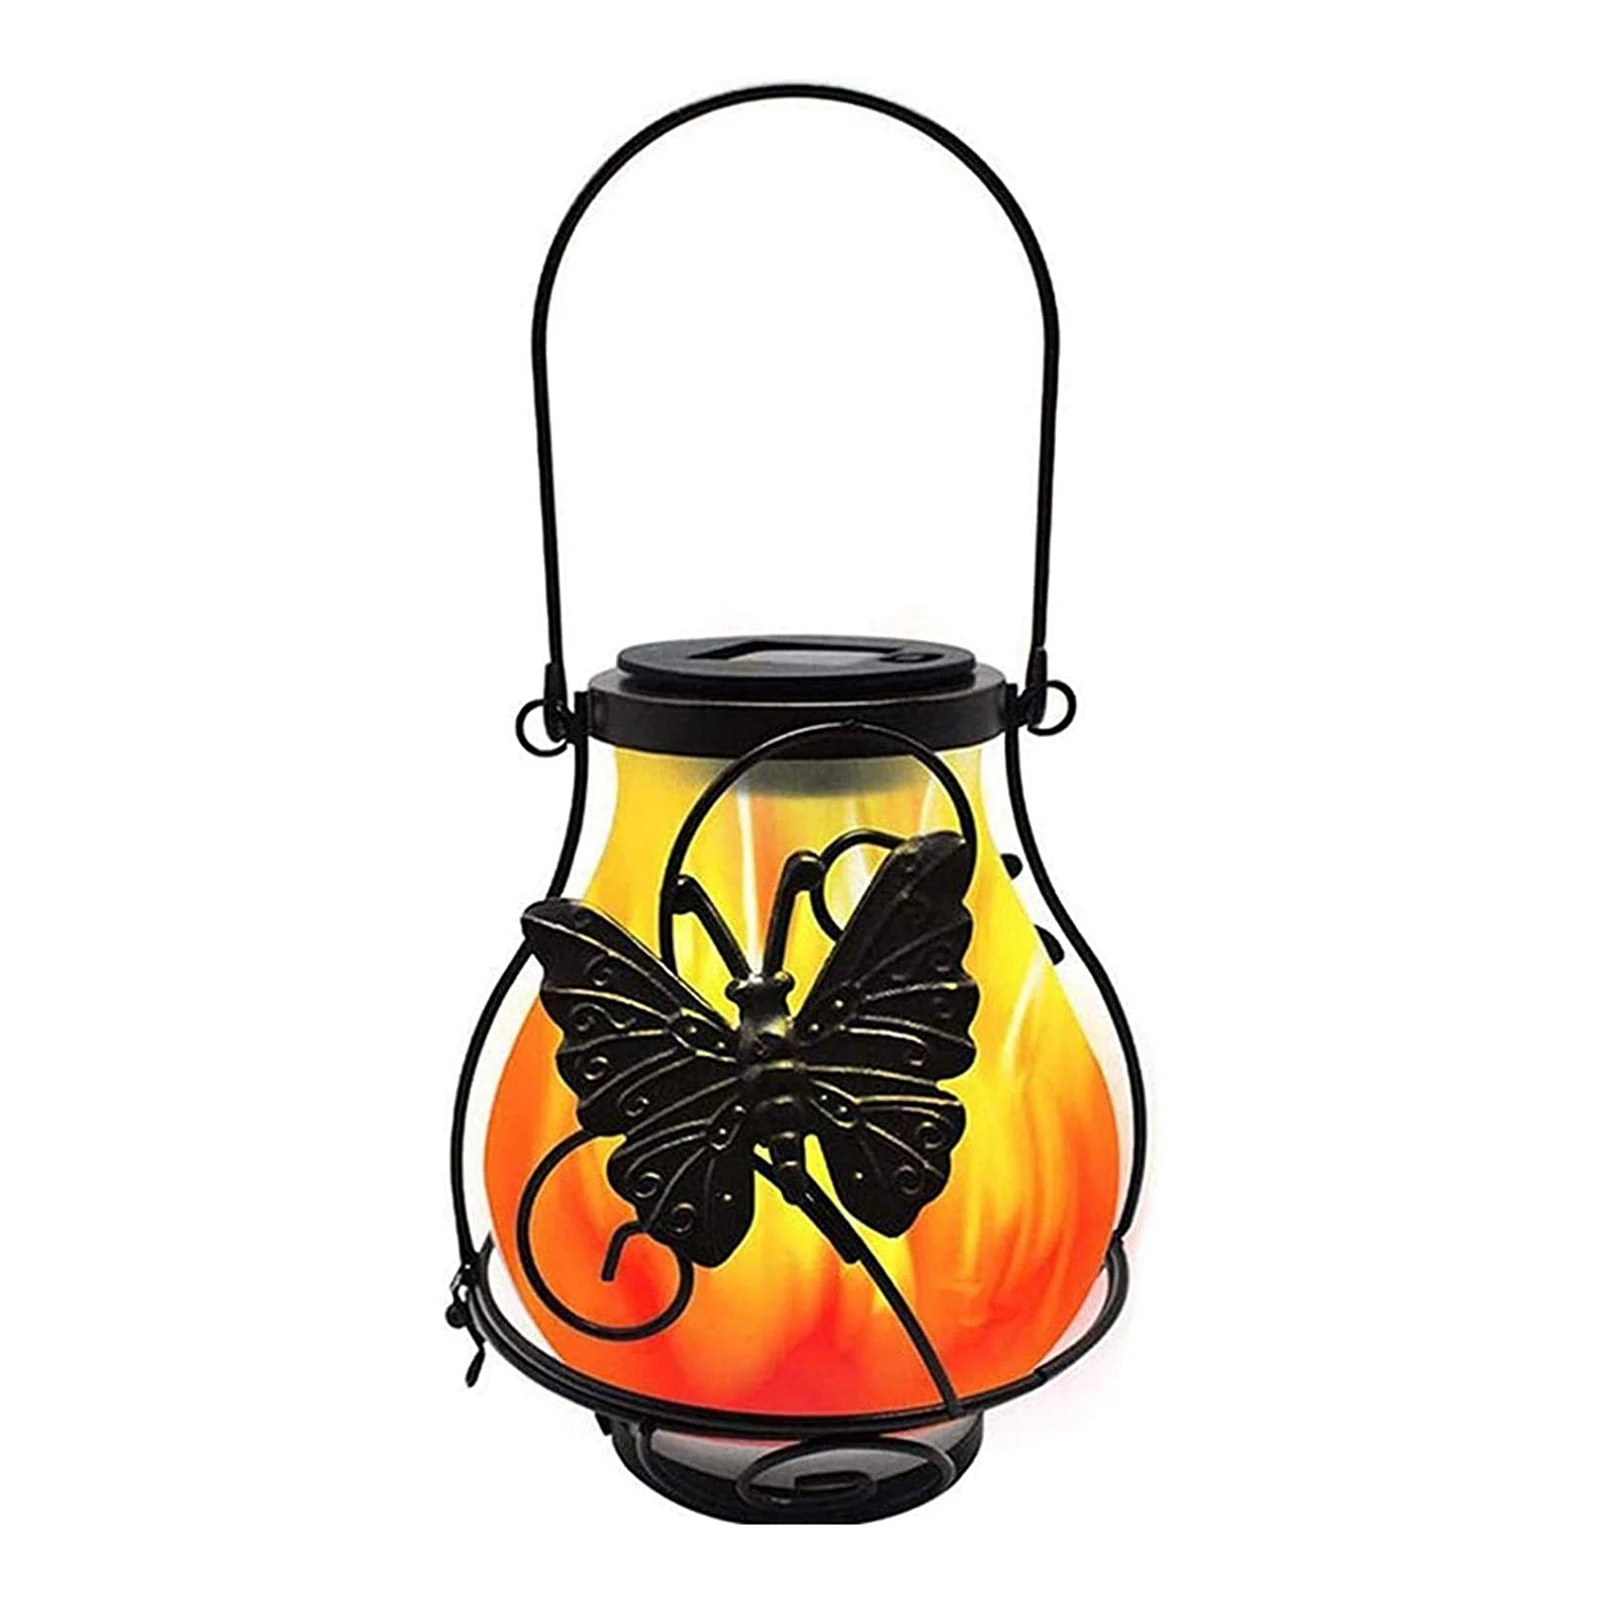 Retro Solar Powered Simulation LED Flame Light Metal Decorative Hanging Lantern Landscape Lamp